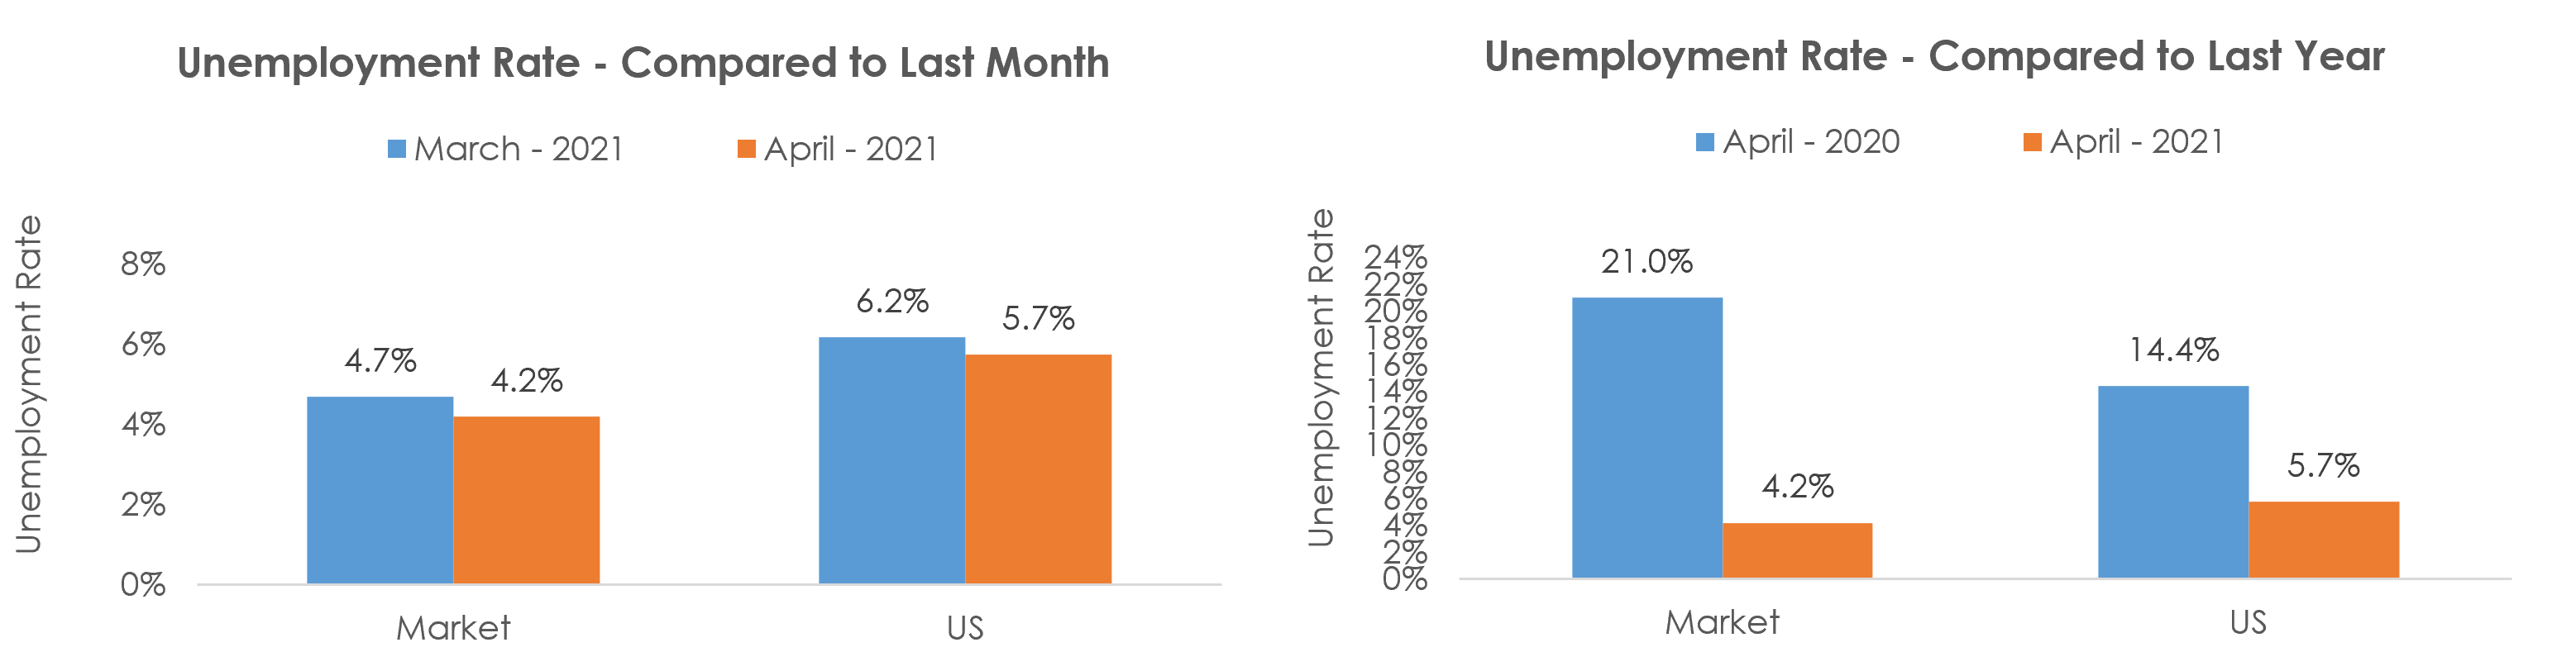 Grand Rapids-Wyoming, MI Unemployment April 2021